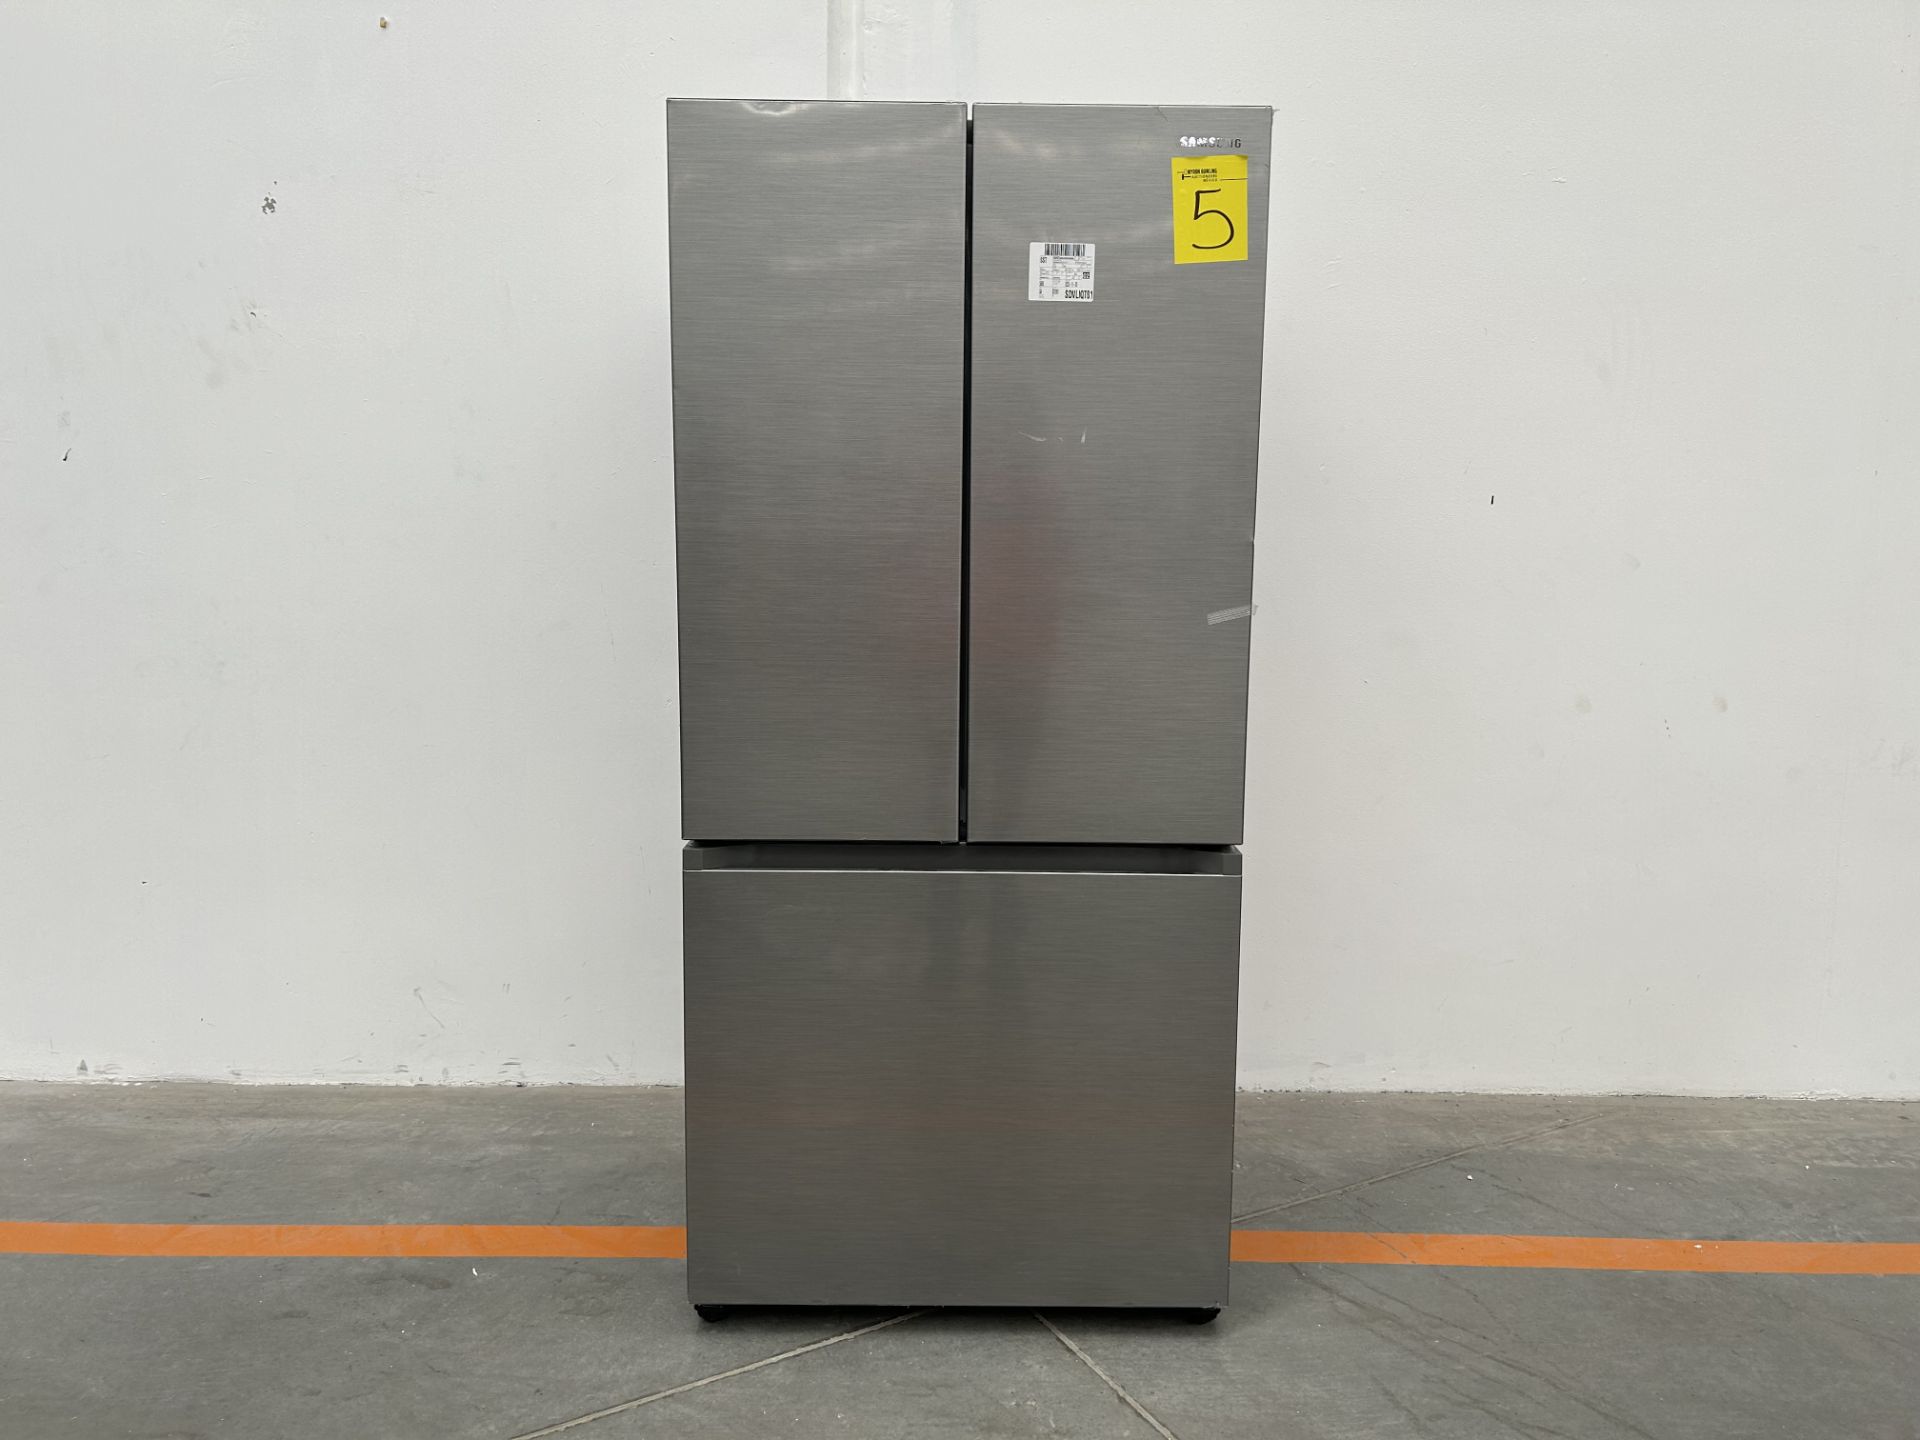 (NUEVO) Refrigerador Marca SAMSUNG, Modelo RF25C5151S9, Serie 00129J, Color GRIS